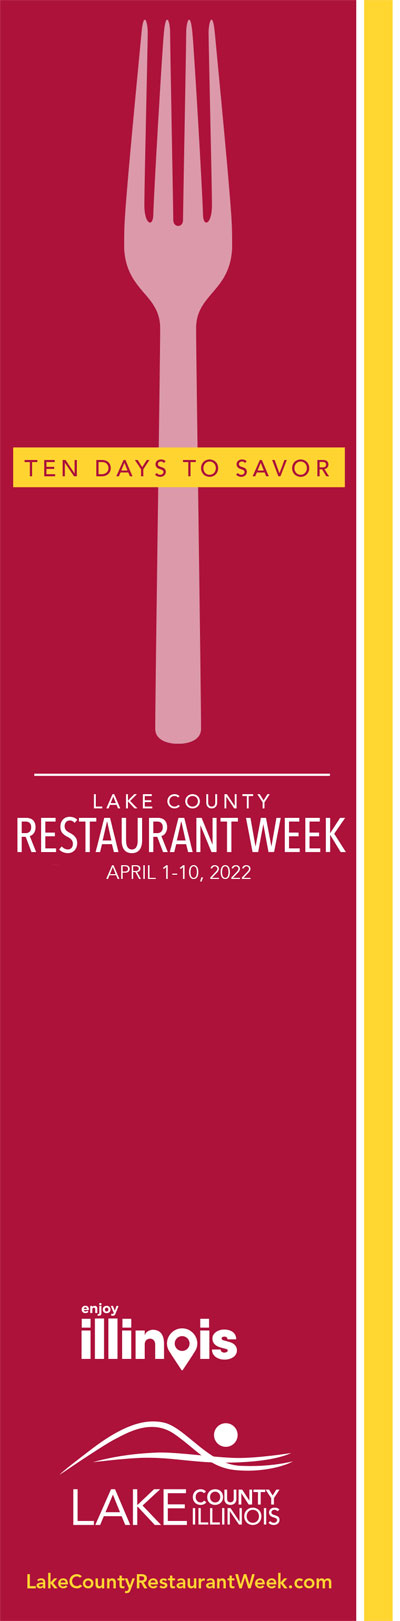 Lake County, Illinois - Restaurant Week